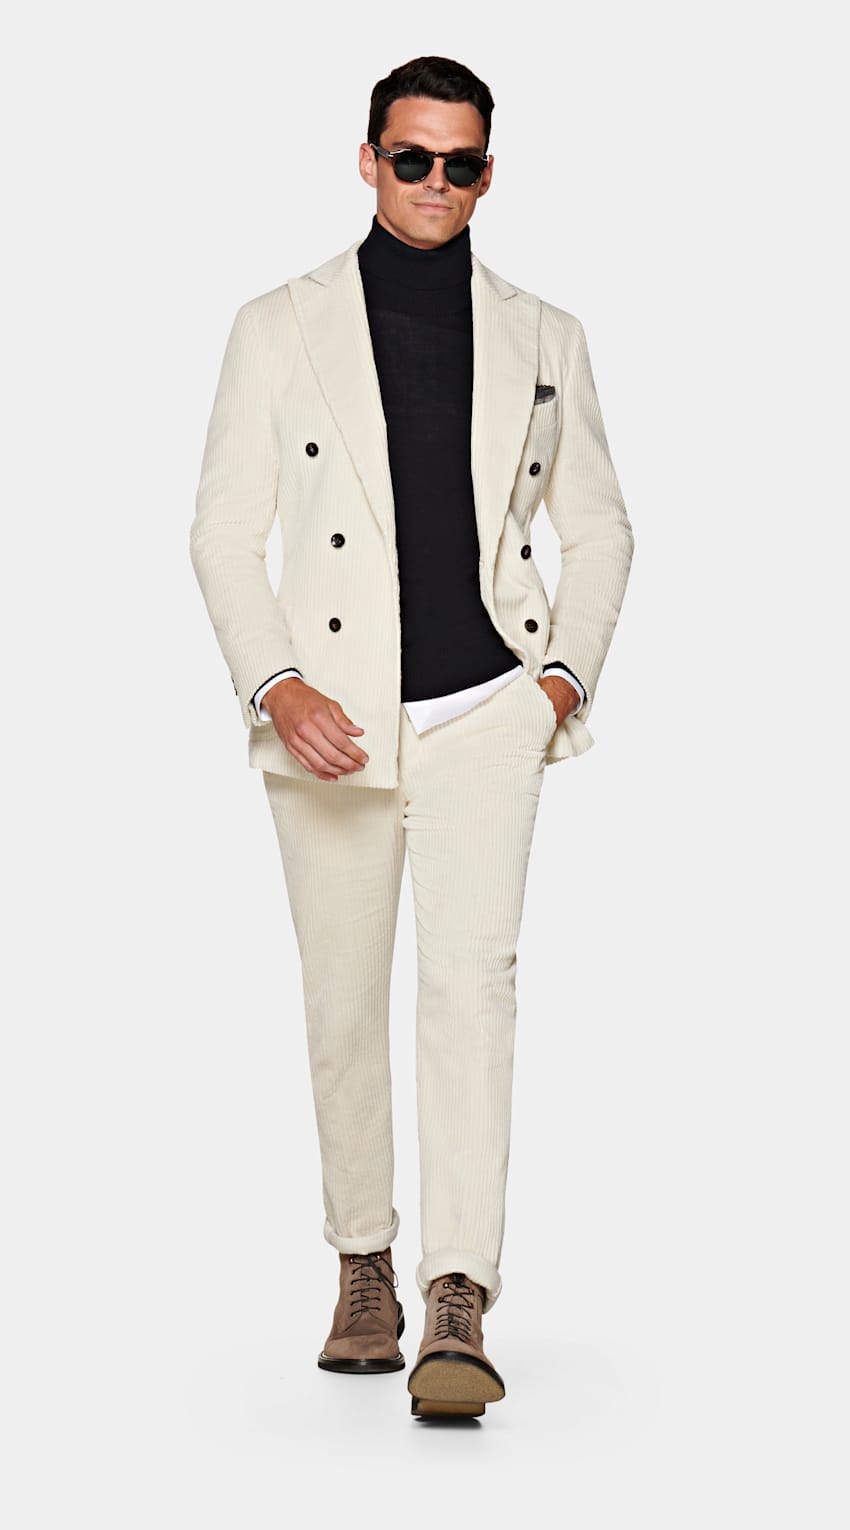 SUITSUPPLY  by Pontoglio, Italy Off White Havana Suit